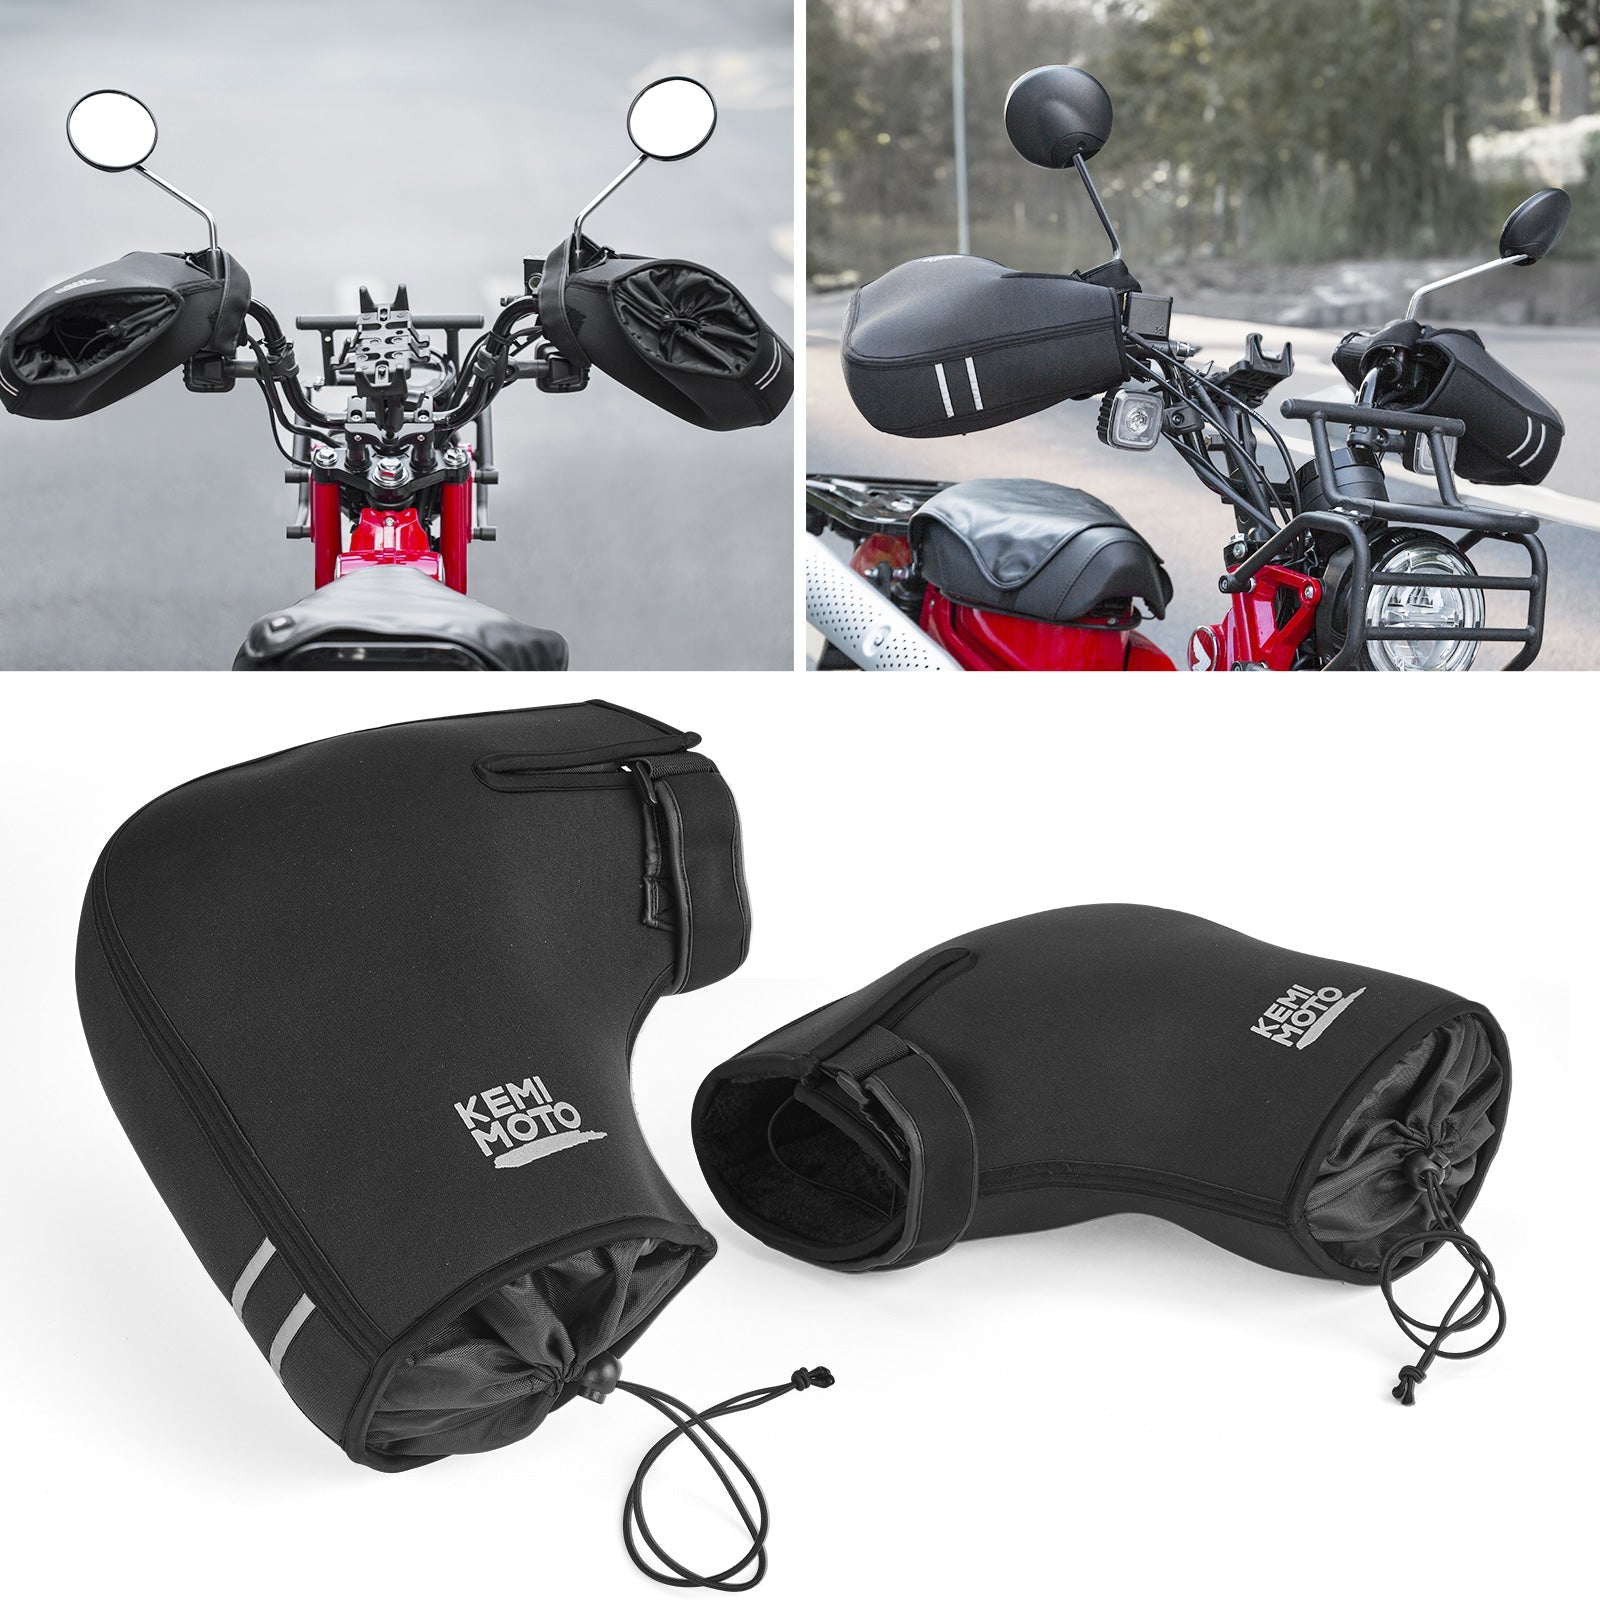 Motorcycle Handle Cover, Cold Protection Grab Handles - Kemimoto